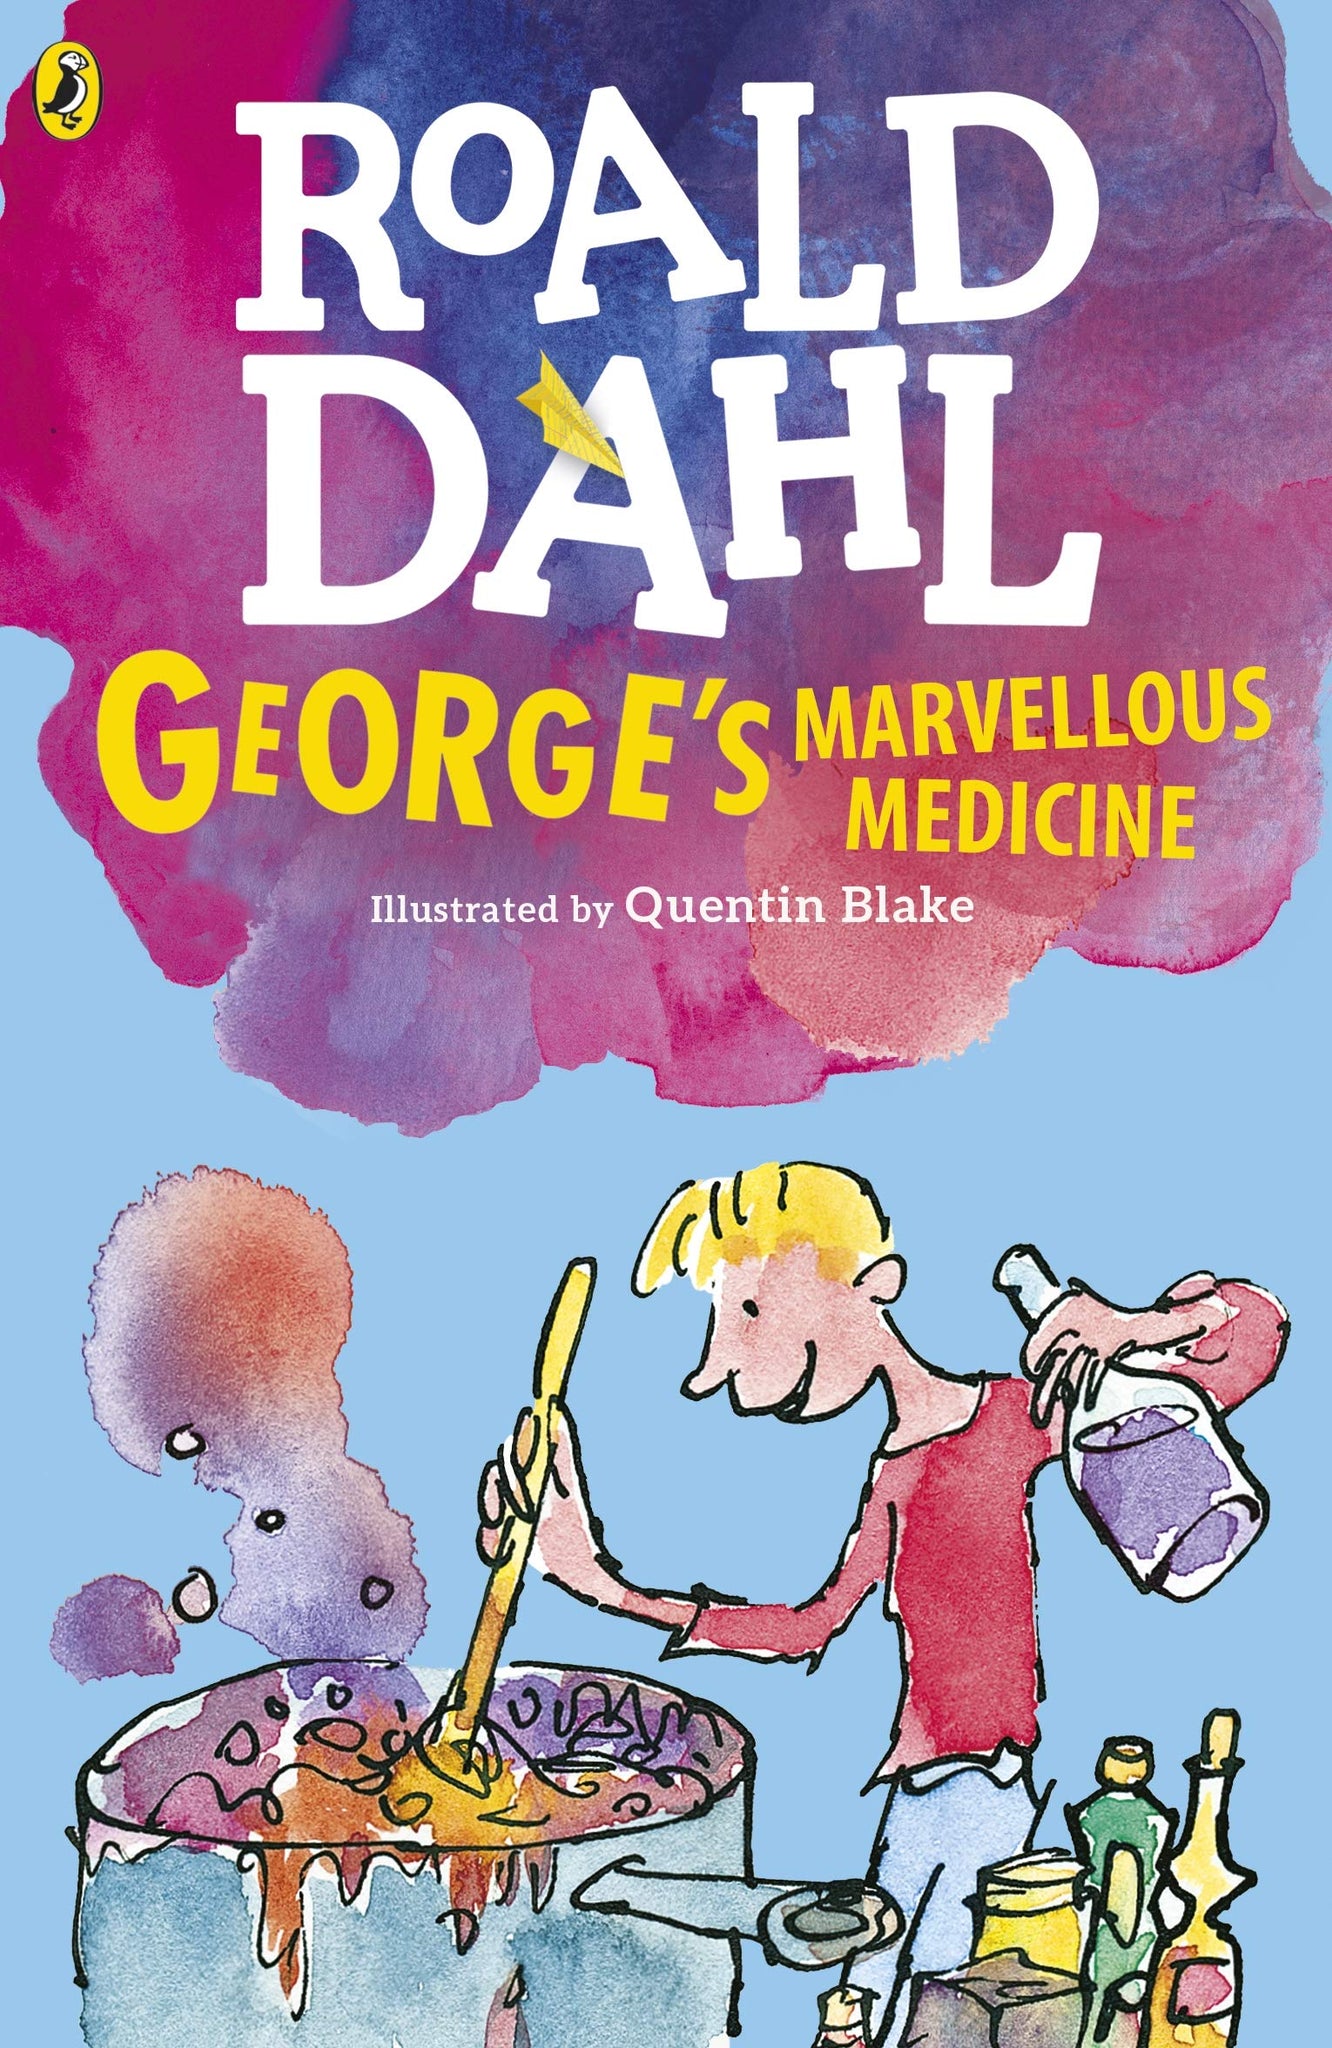 A Medicina Maravilhosa de George Roald Dahl